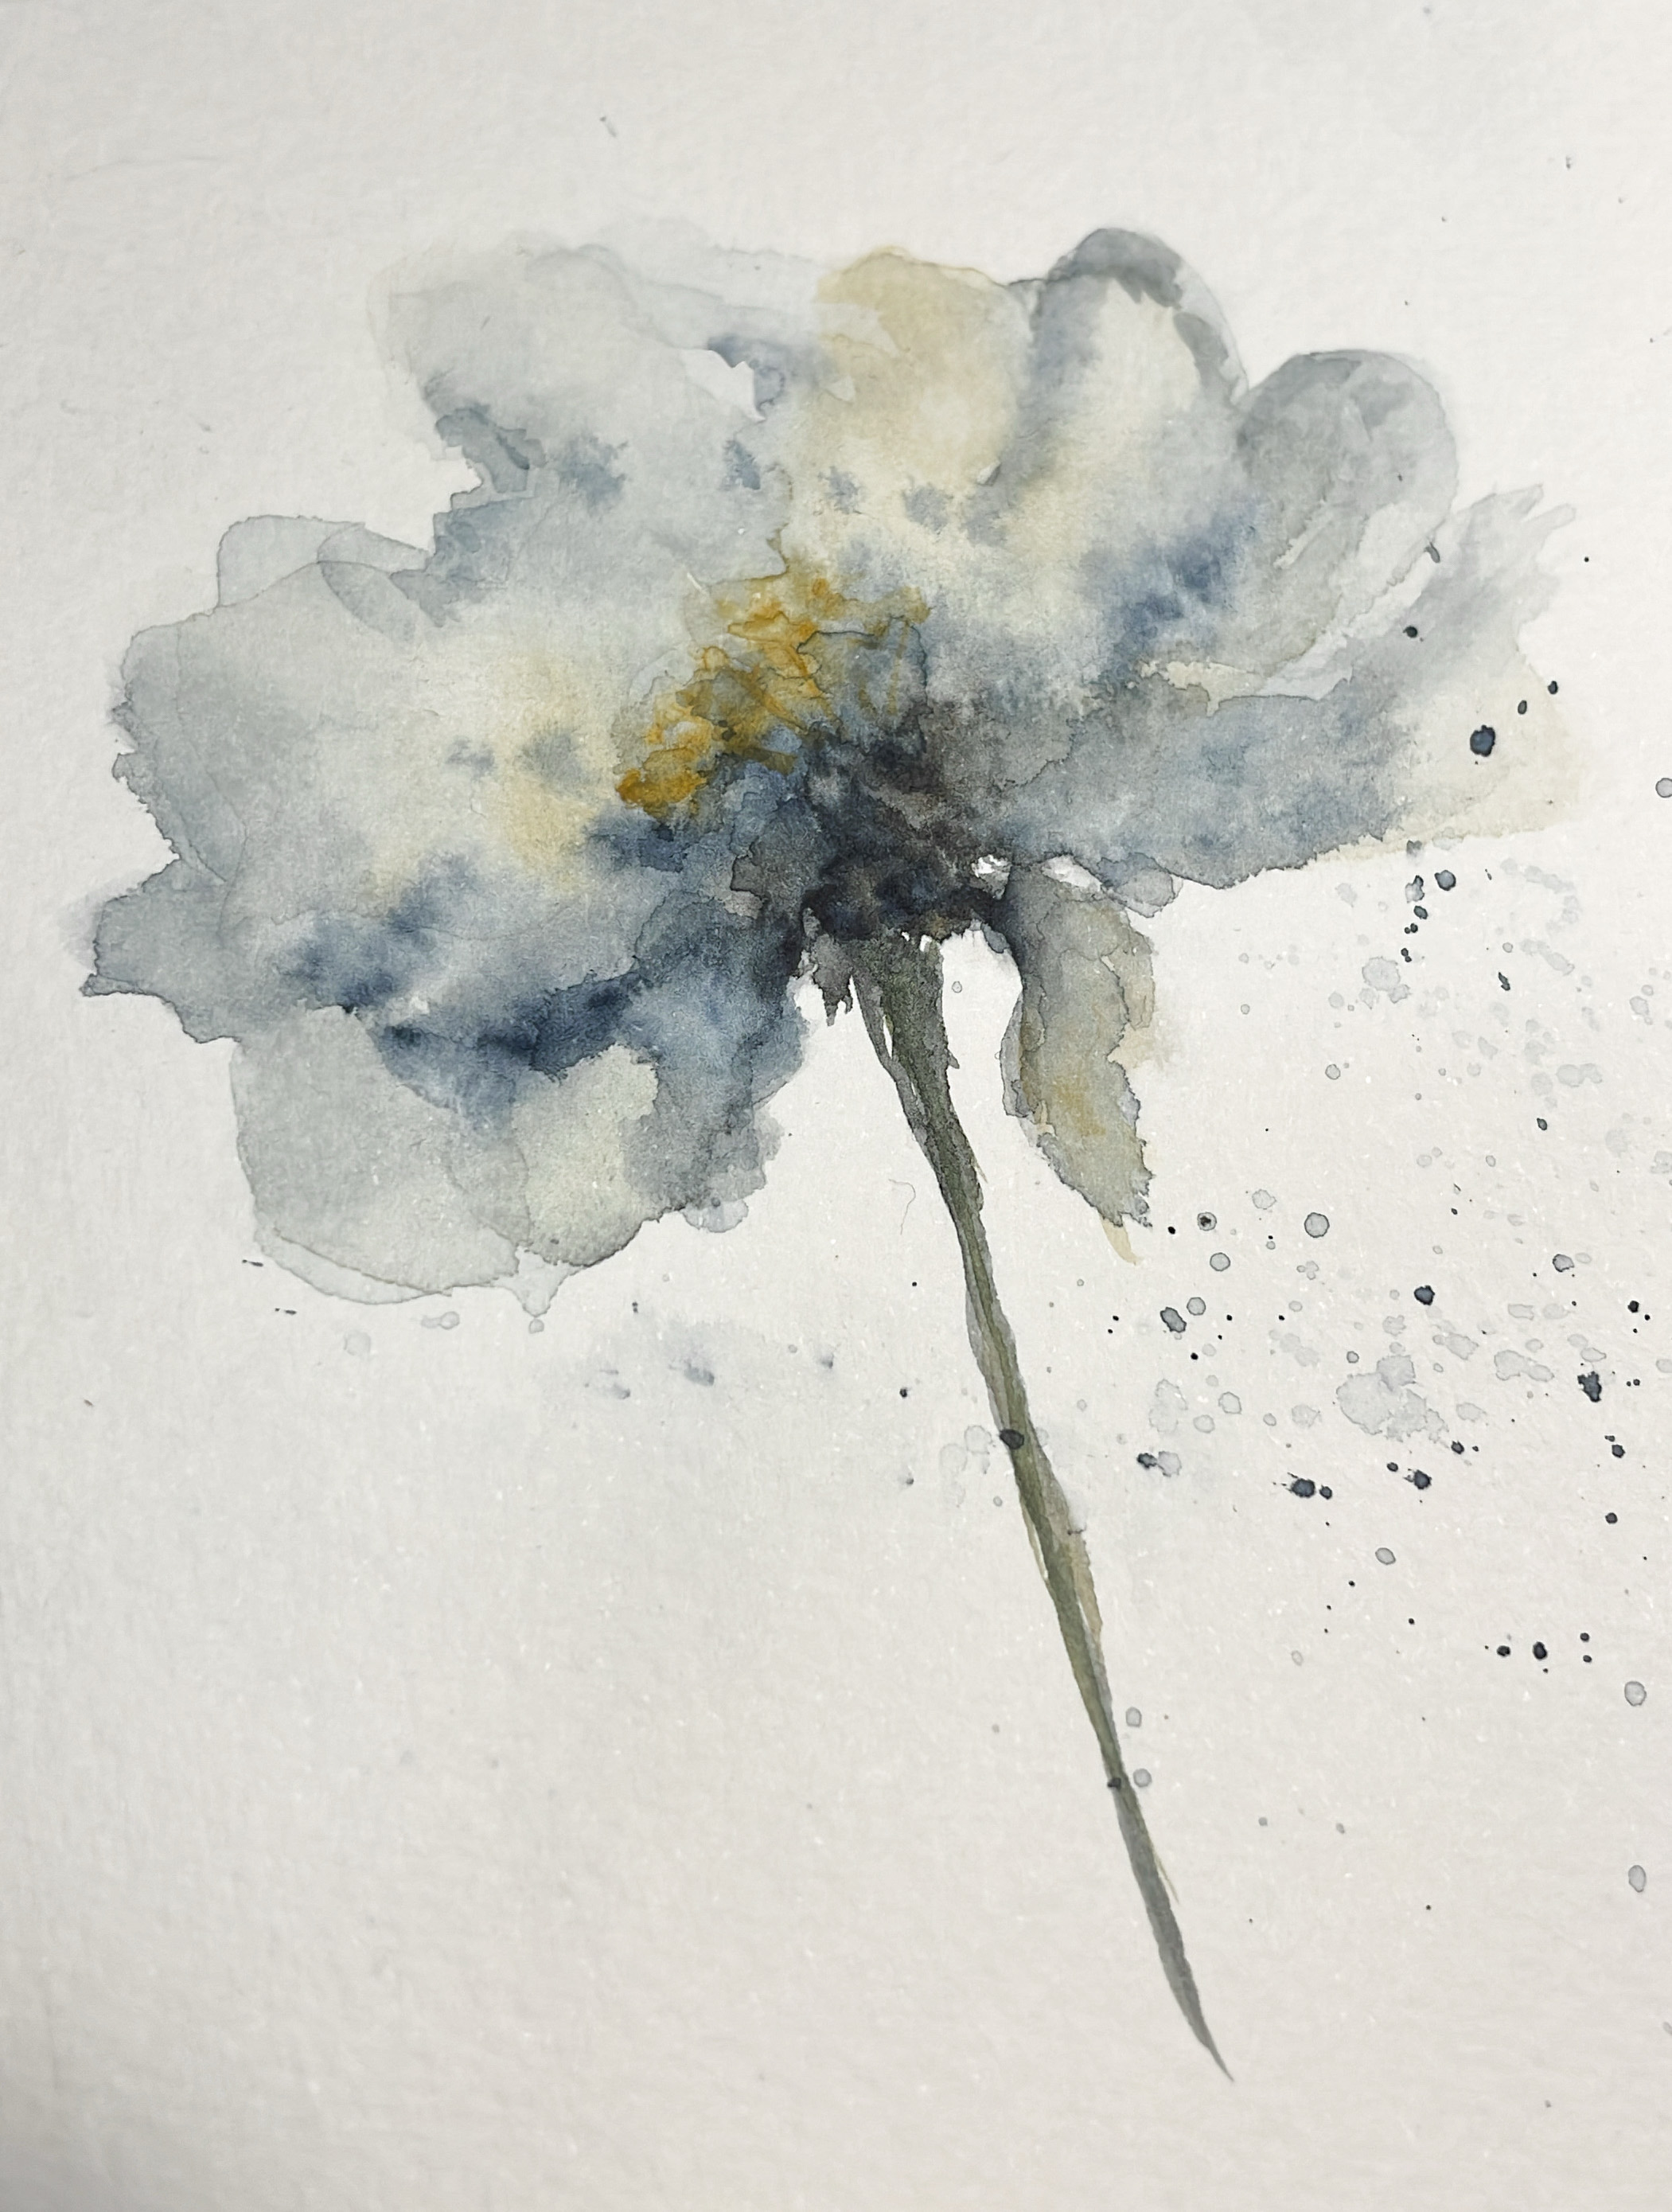 Loose watercolor flower by colorsbymaria on DeviantArt